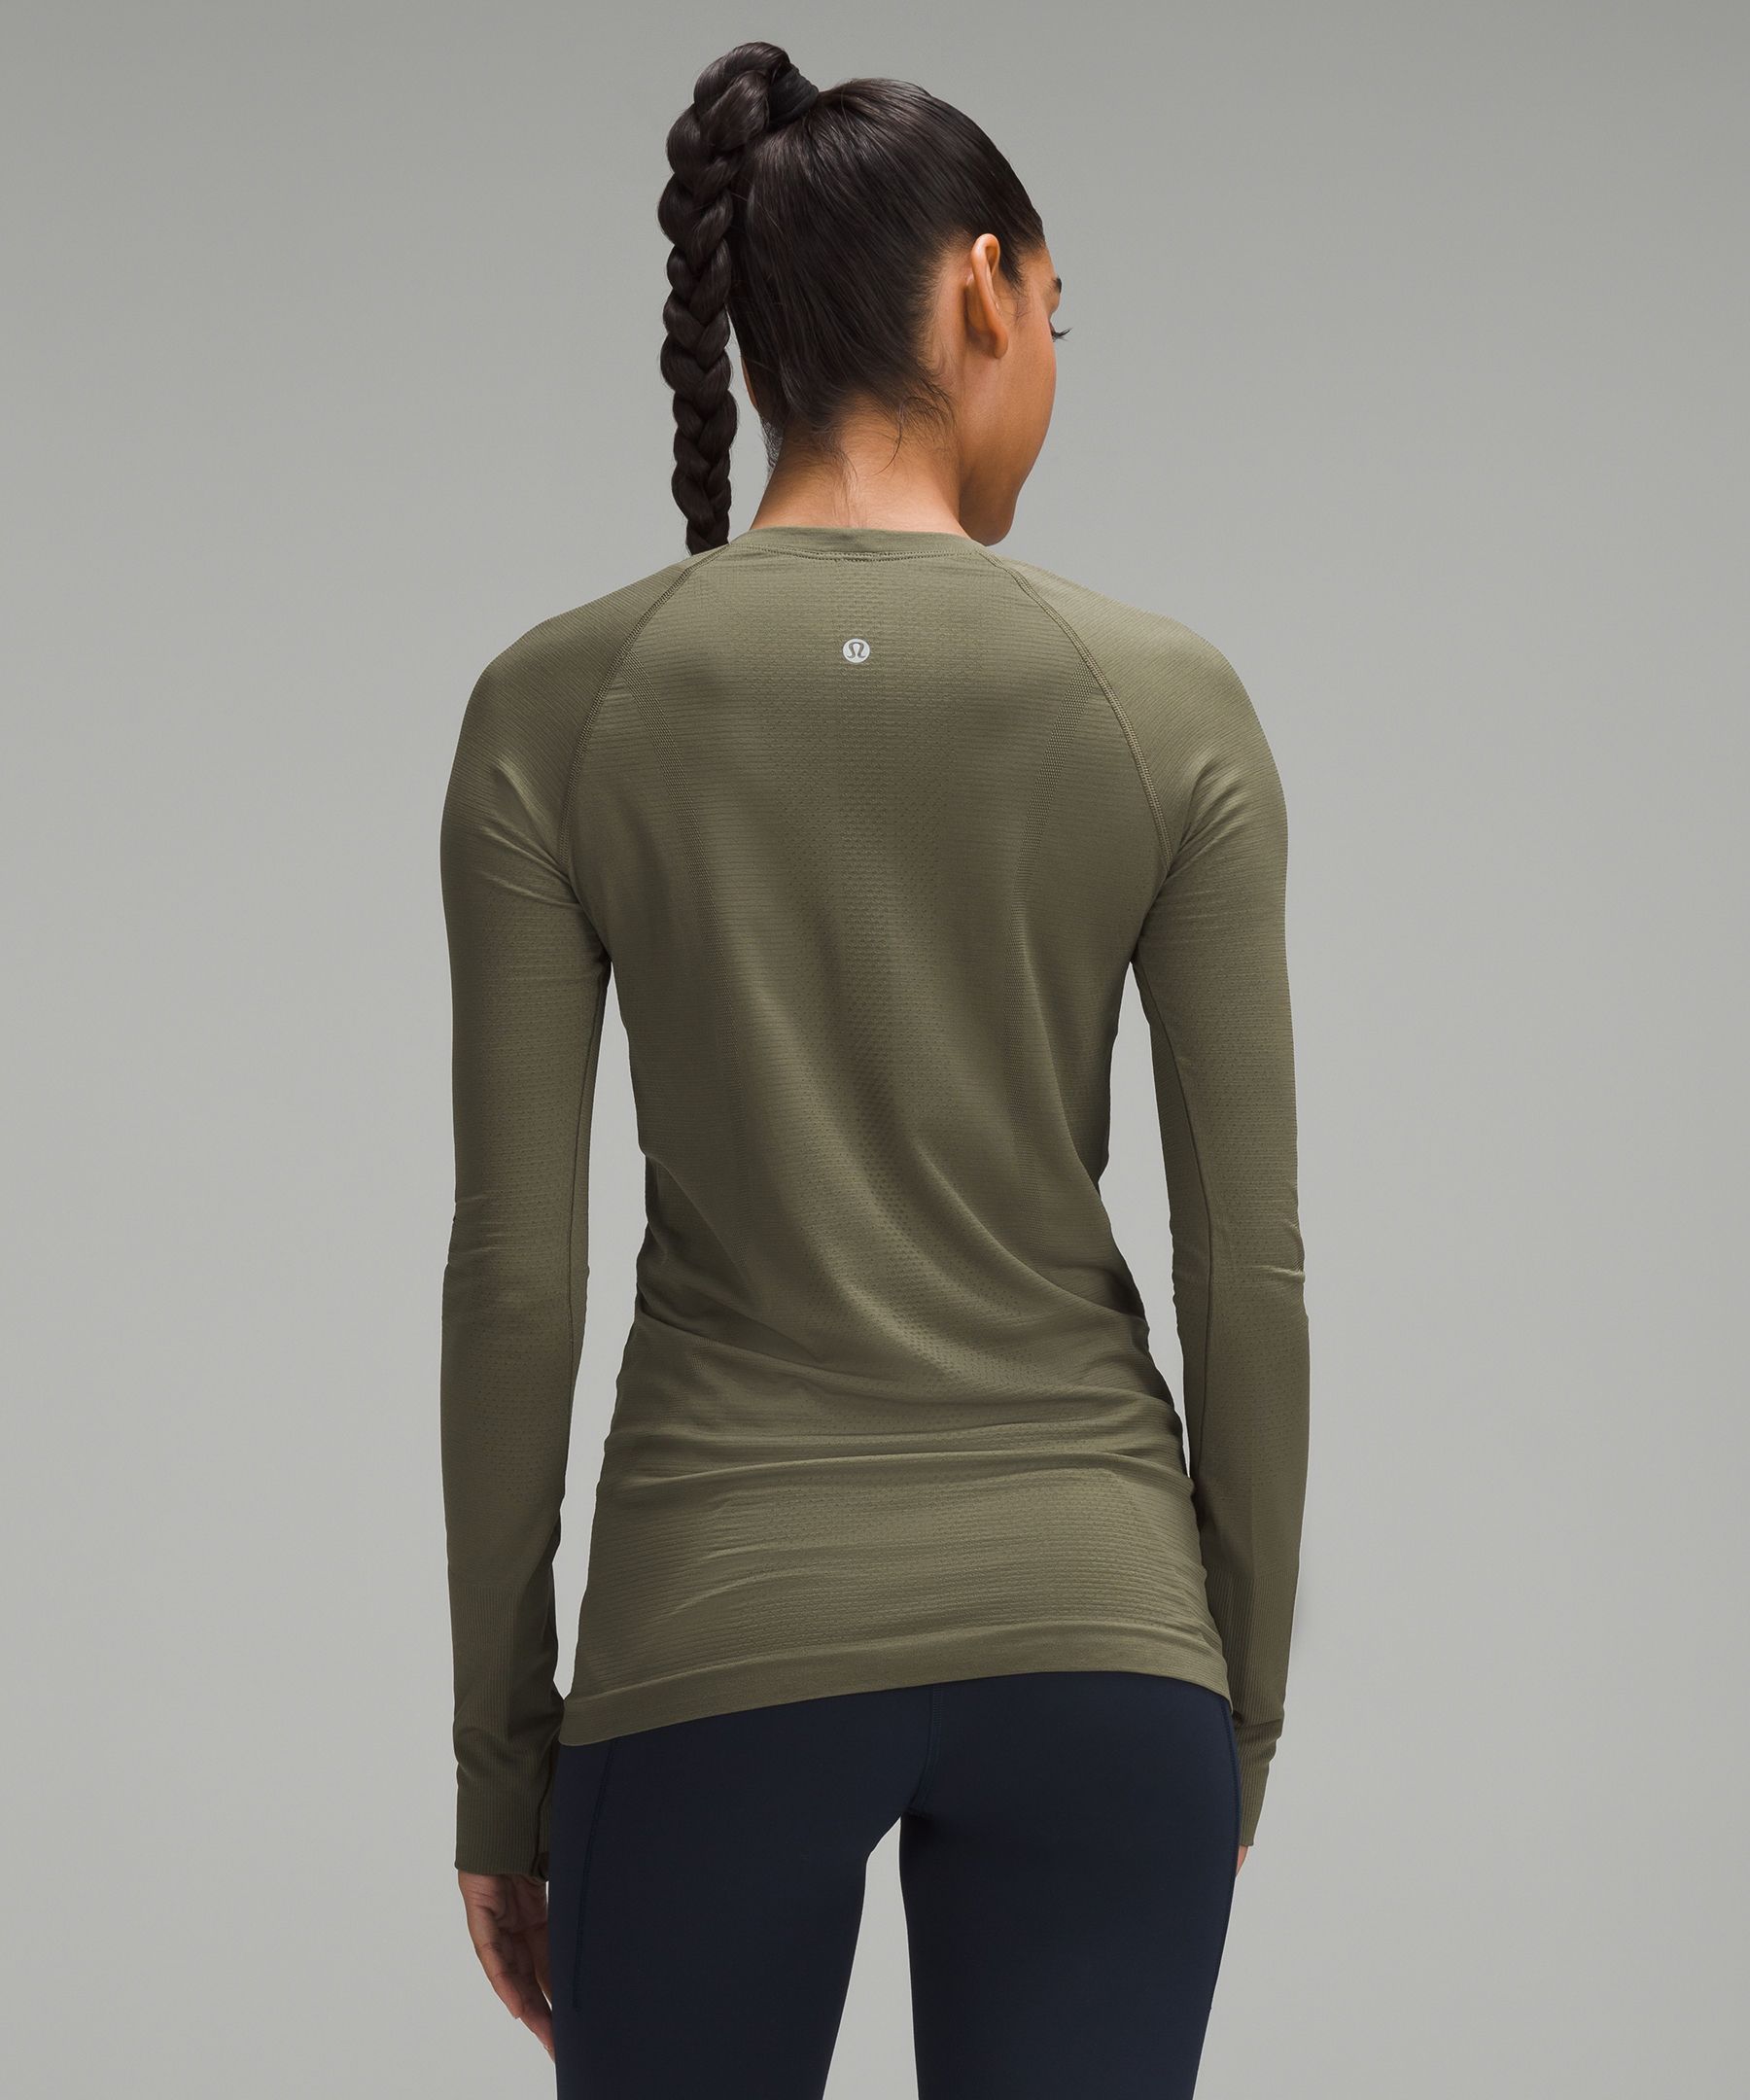 Lululemon athletica Swiftly Tech Cropped Long-Sleeve Shirt 2.0, Women's Long  Sleeve Shirts